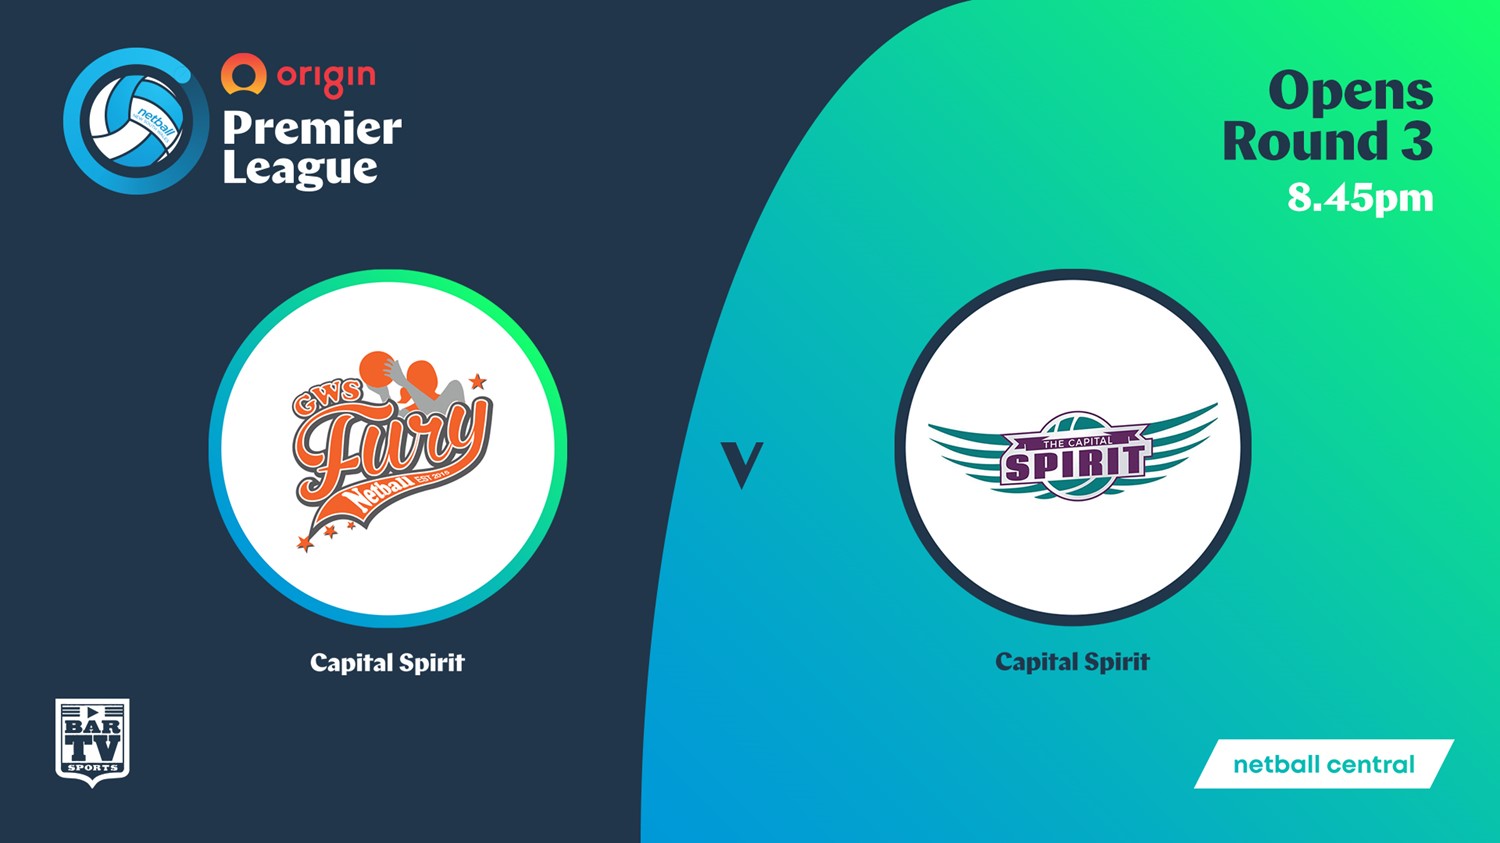 NSW Prem League Round 3 - Opens - GWS Fury v Capital Spirit Minigame Slate Image